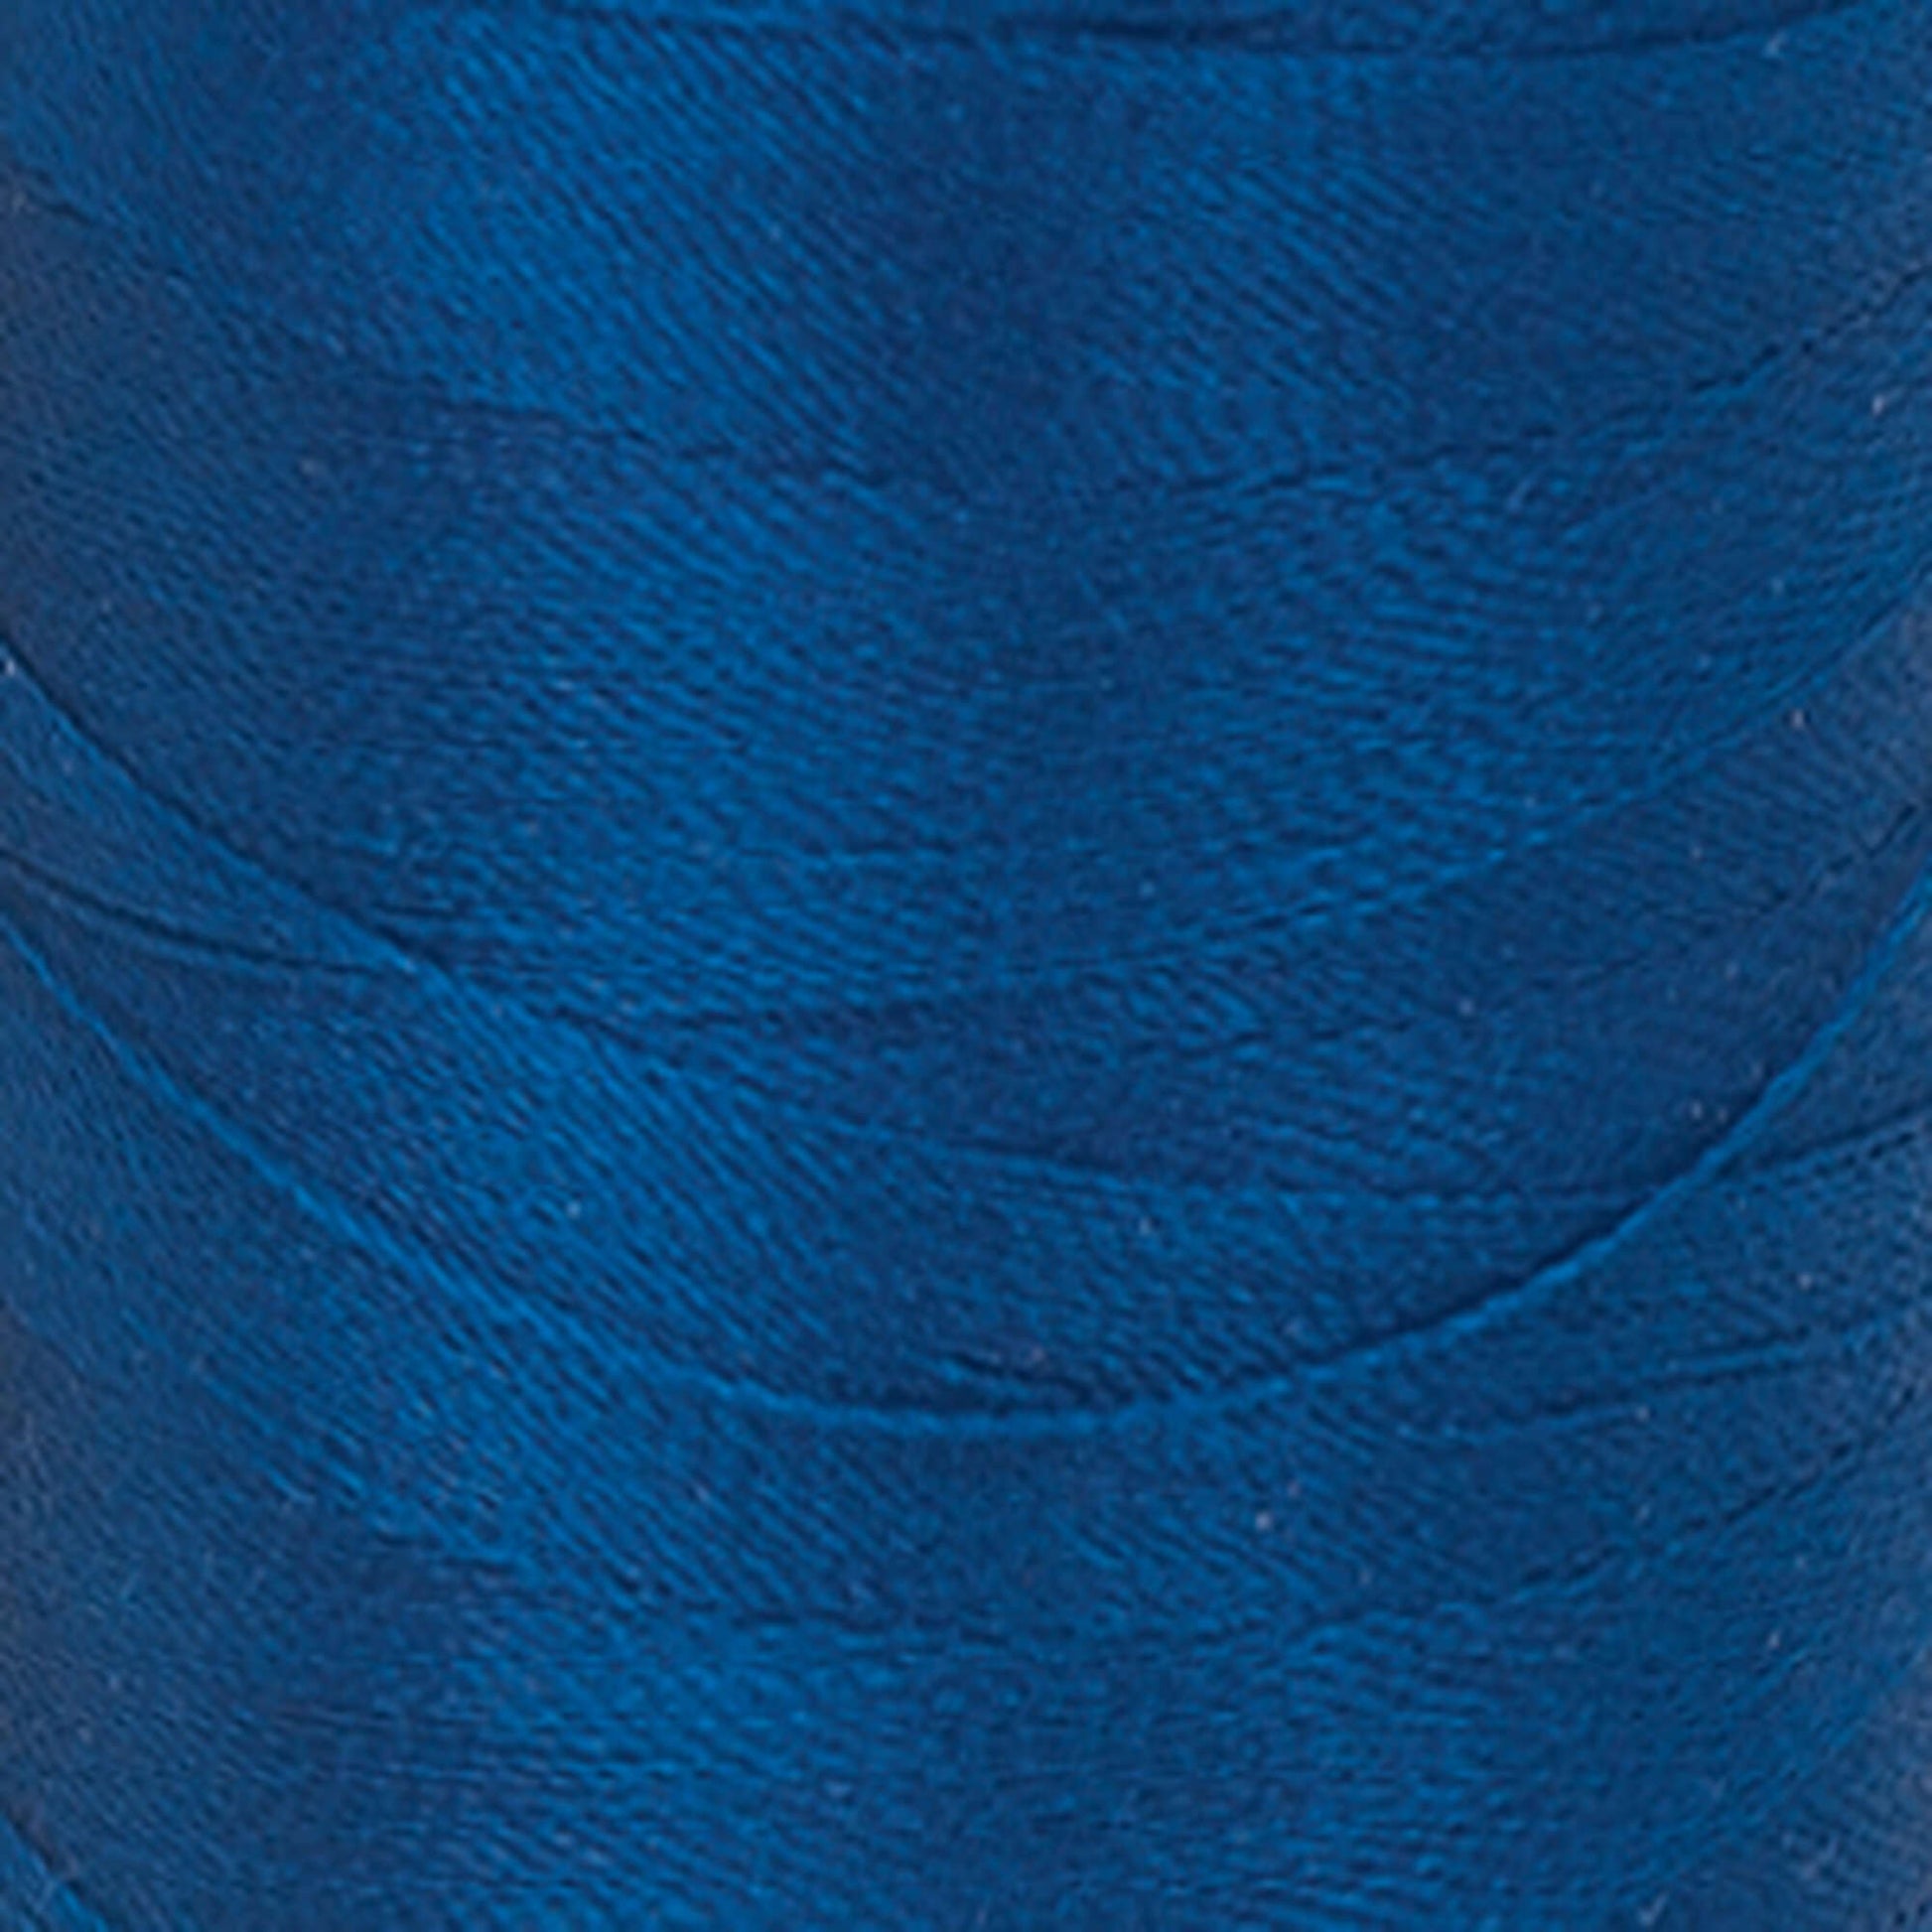 Coats & Clark Machine Embroidery Thread (1100 Yards) Yale Blue